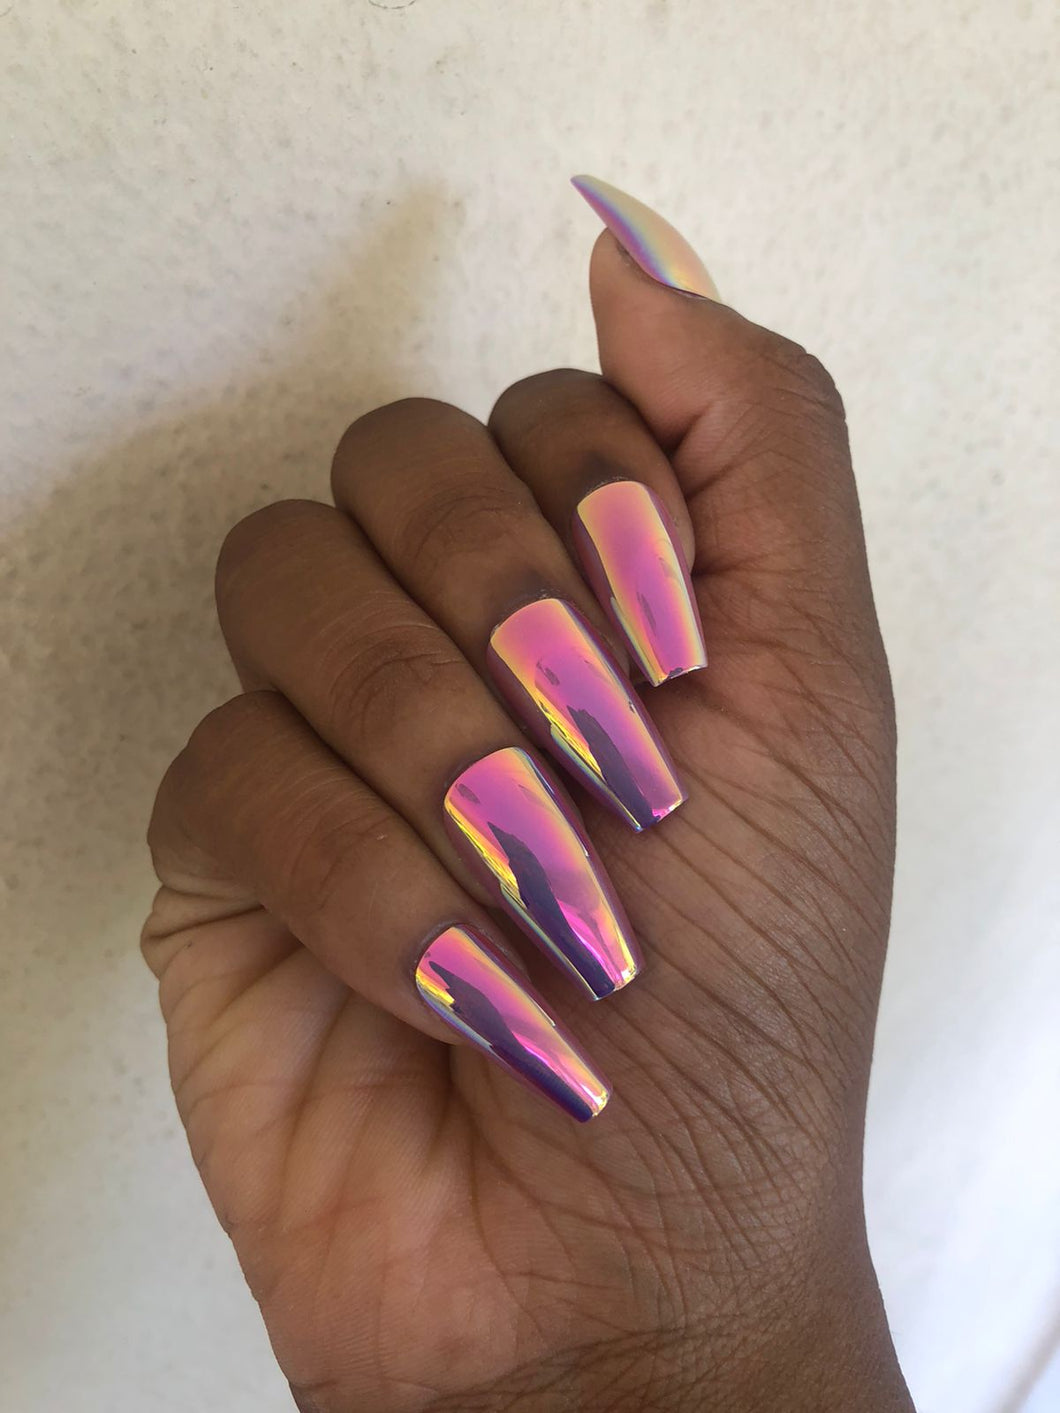 “Diva” - Cosmic press on nails